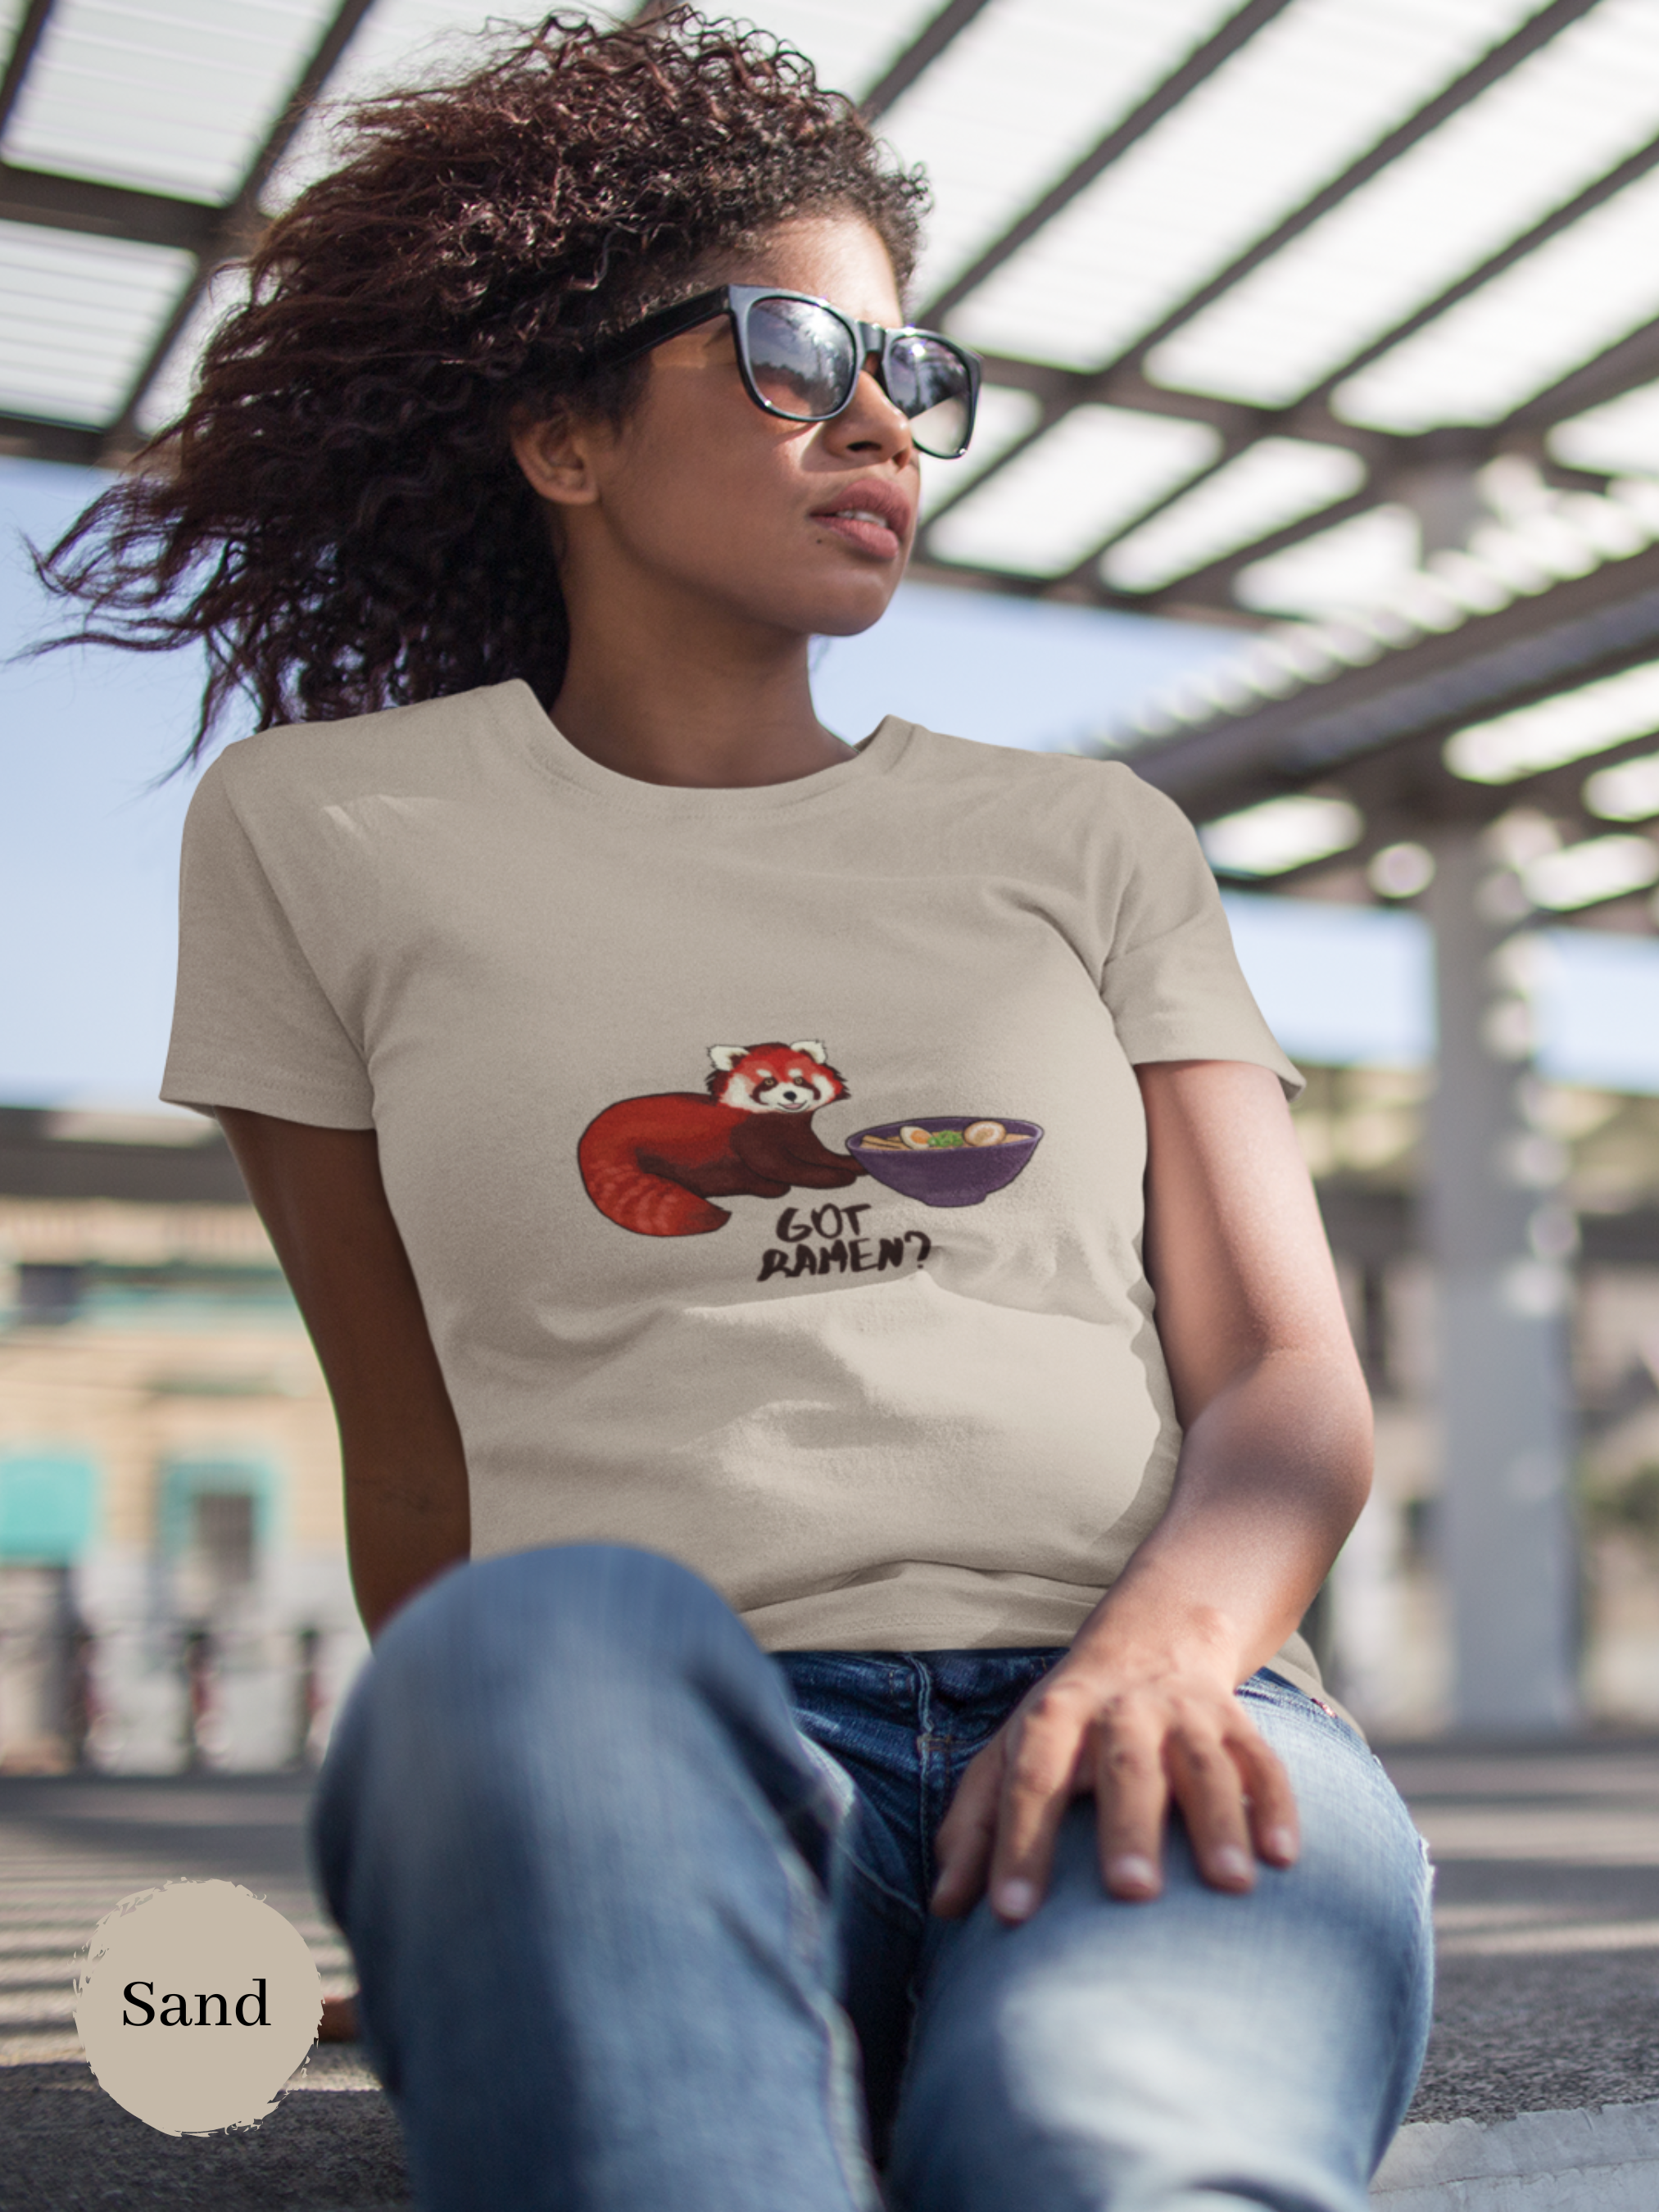 Ramen T-shirt: "Got Ramen?" Cute Red Panda with Ramen Bowl - Japanese Foodie Shirt with Ramen Art and Lesser Panda Graphic